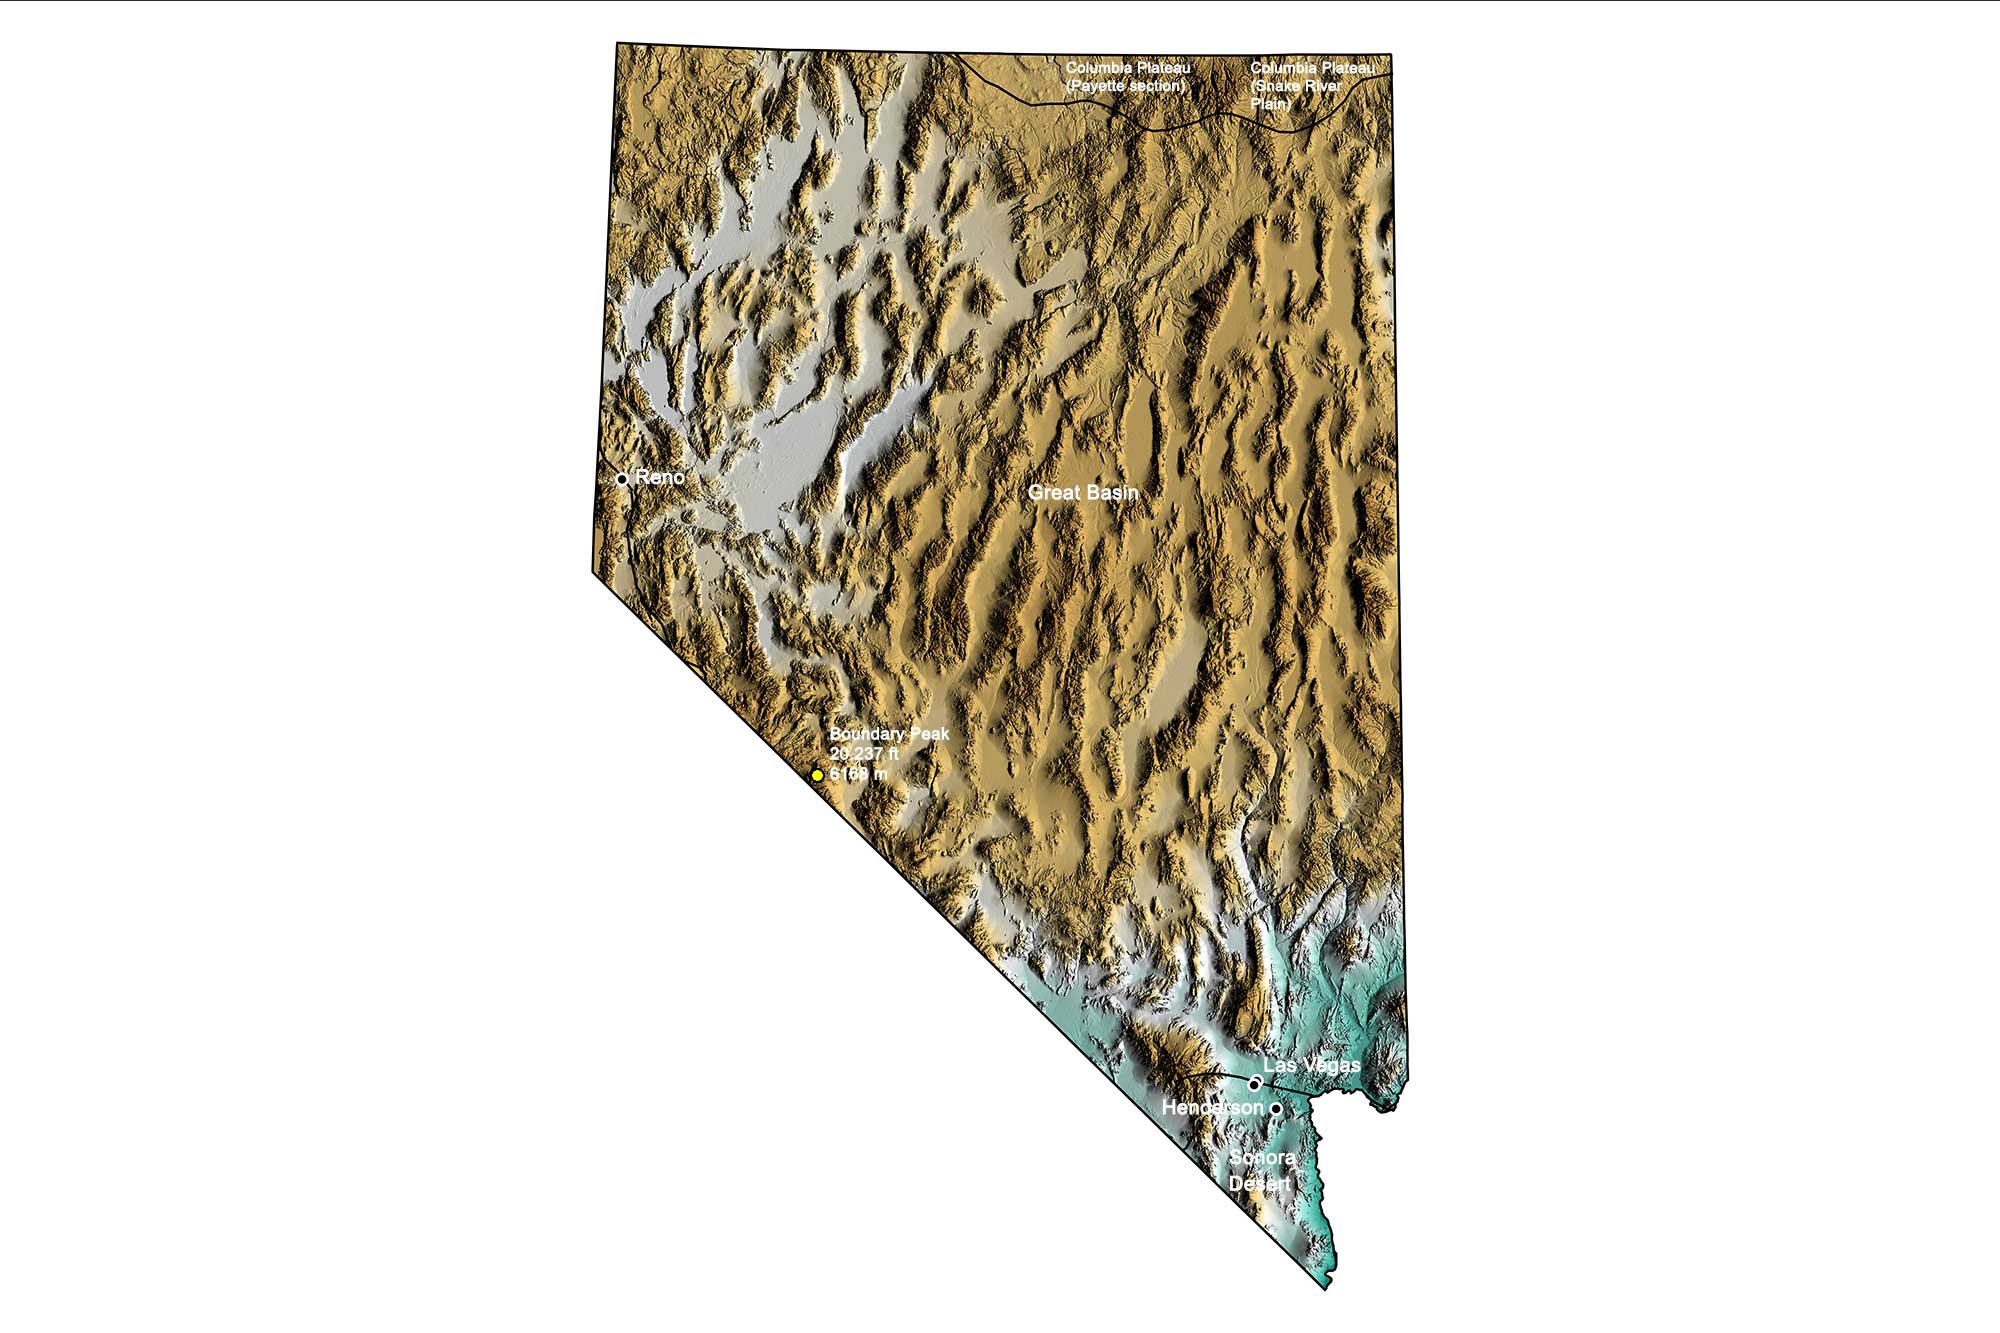 Topographic map of Nevada.